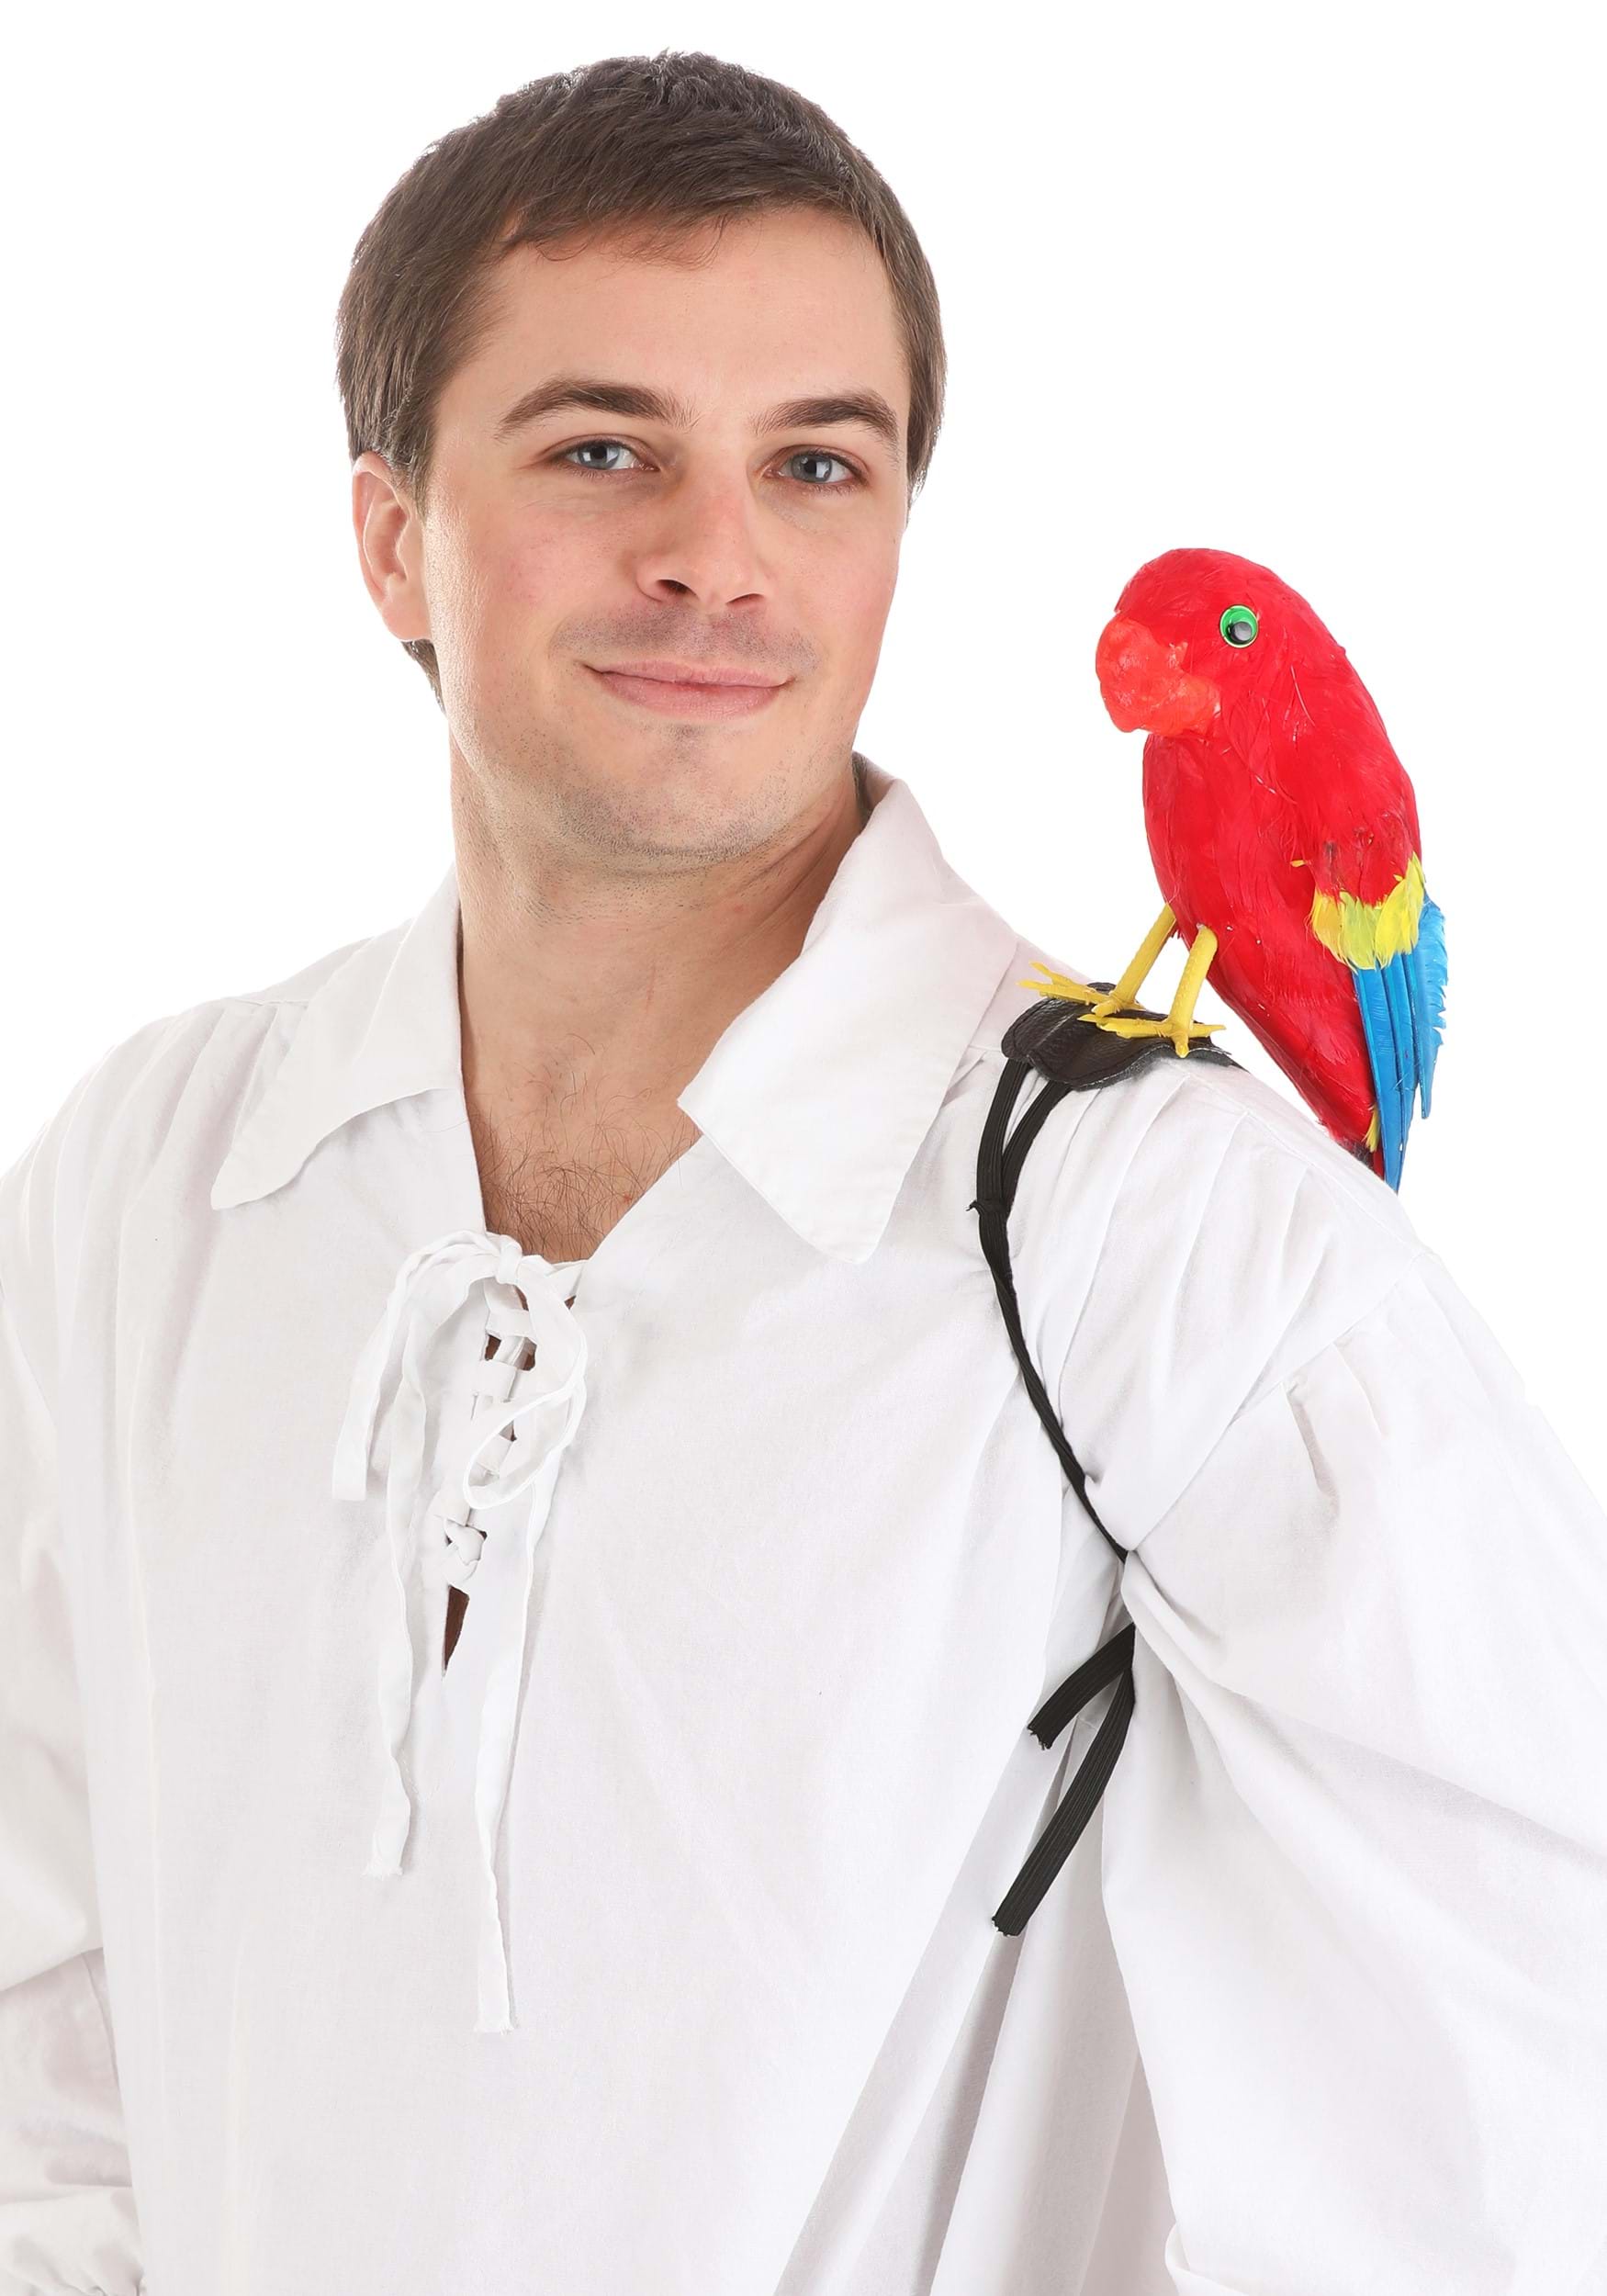 pirate parrot shoulder